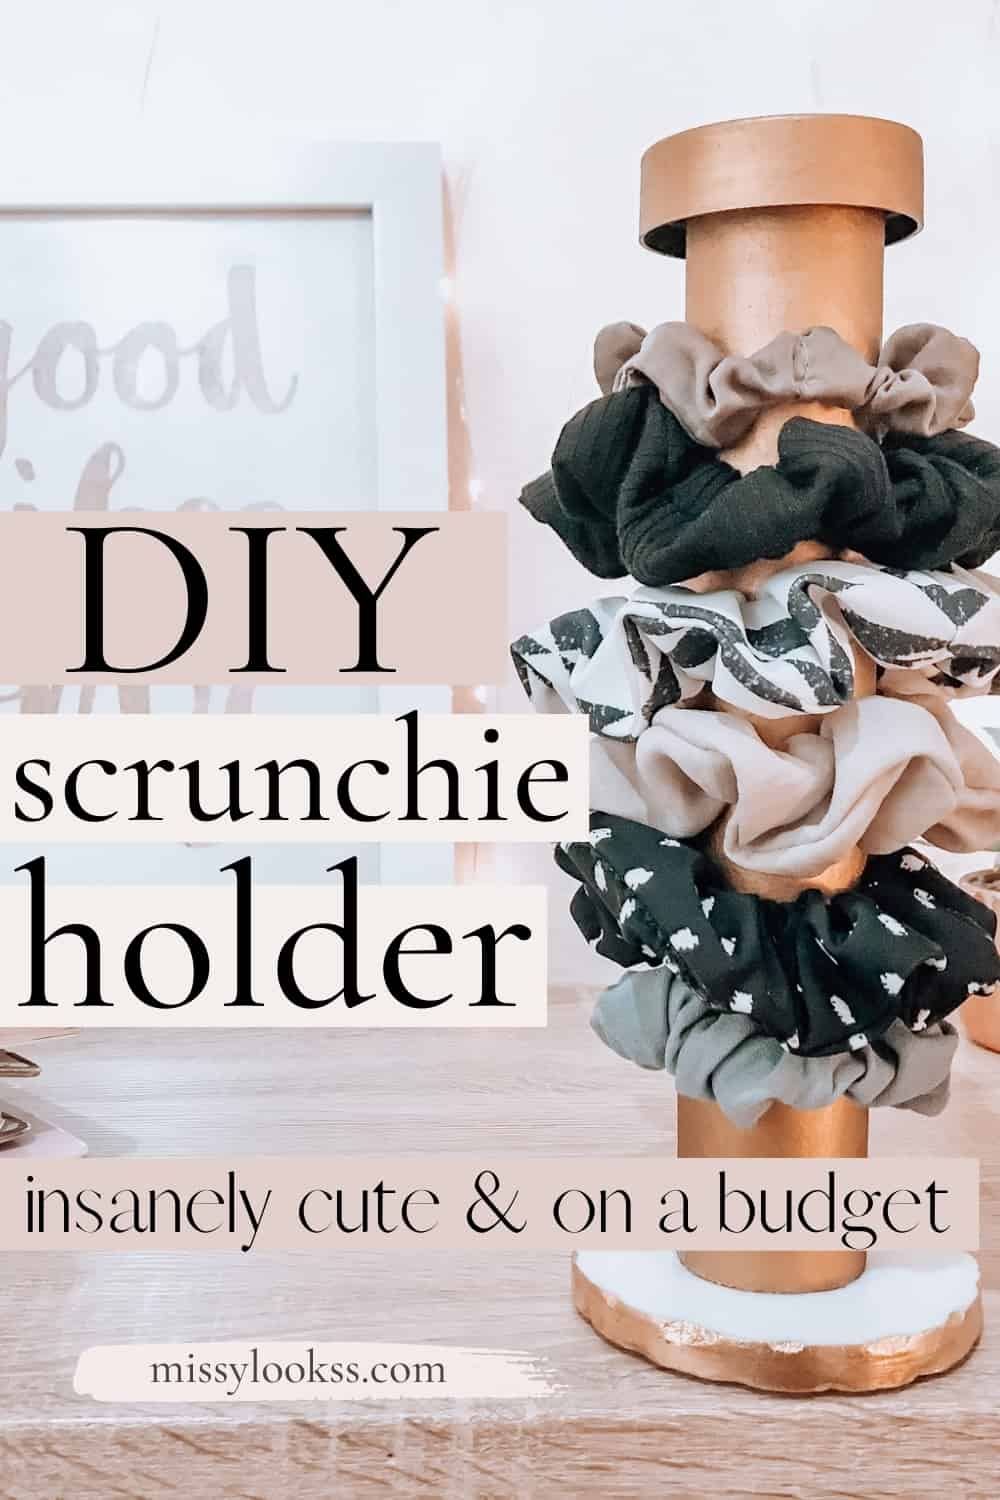 DIY Scrunchie display stand